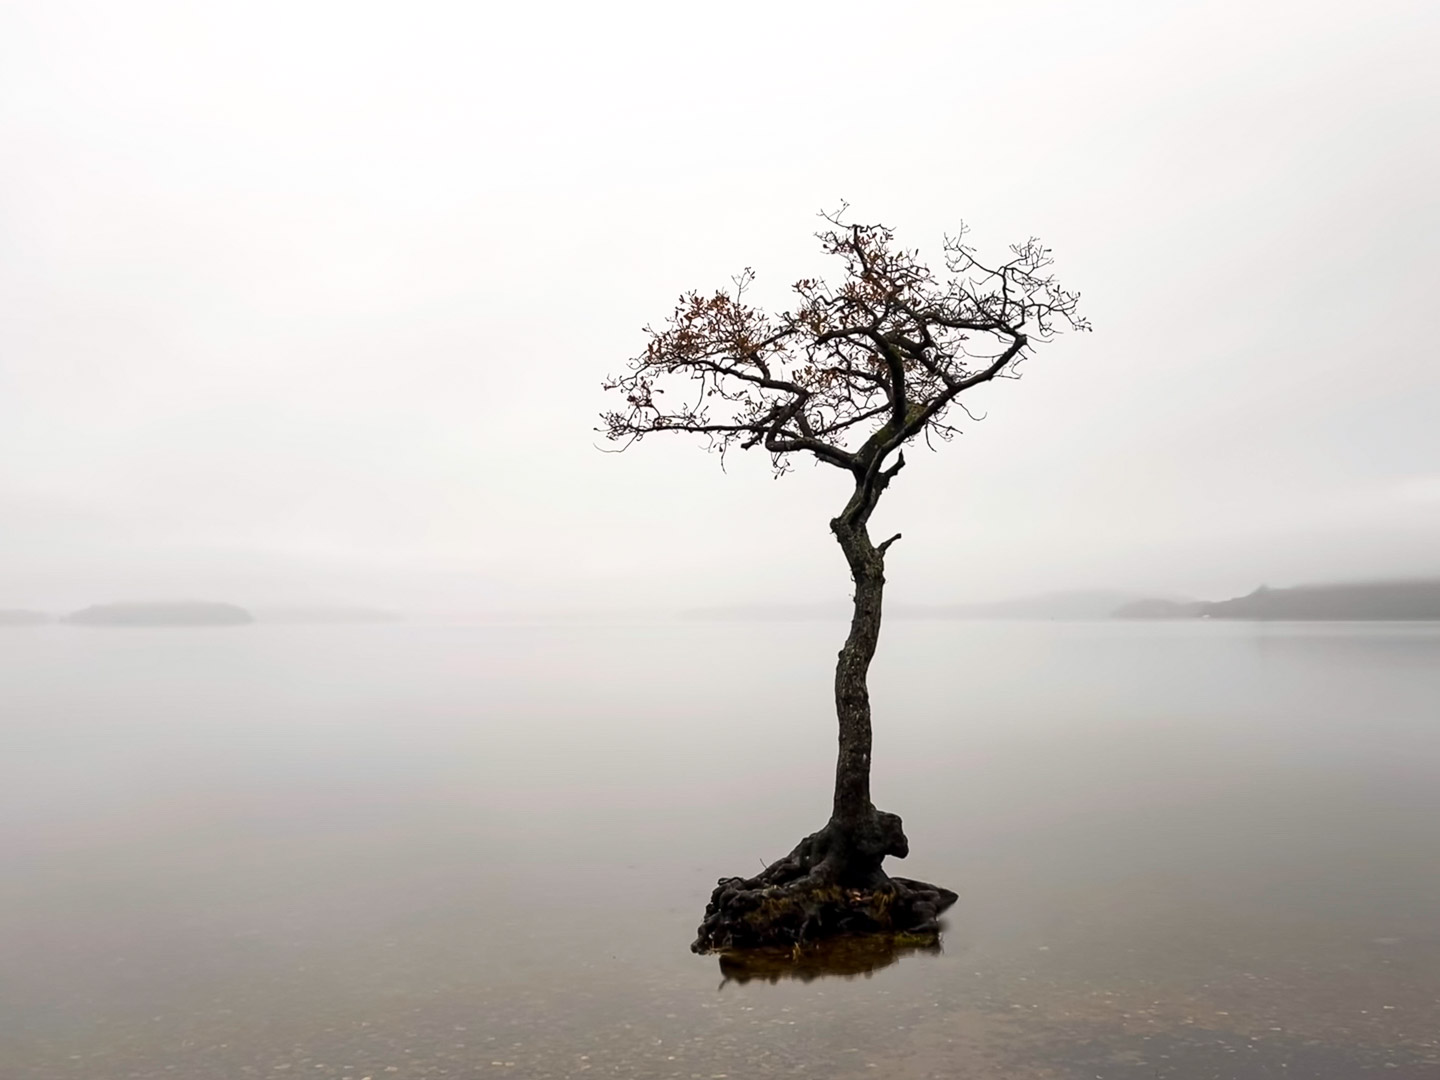 8.11.2021 - Milarrochy Bay, Loch Lomond, photoshopped ;-)